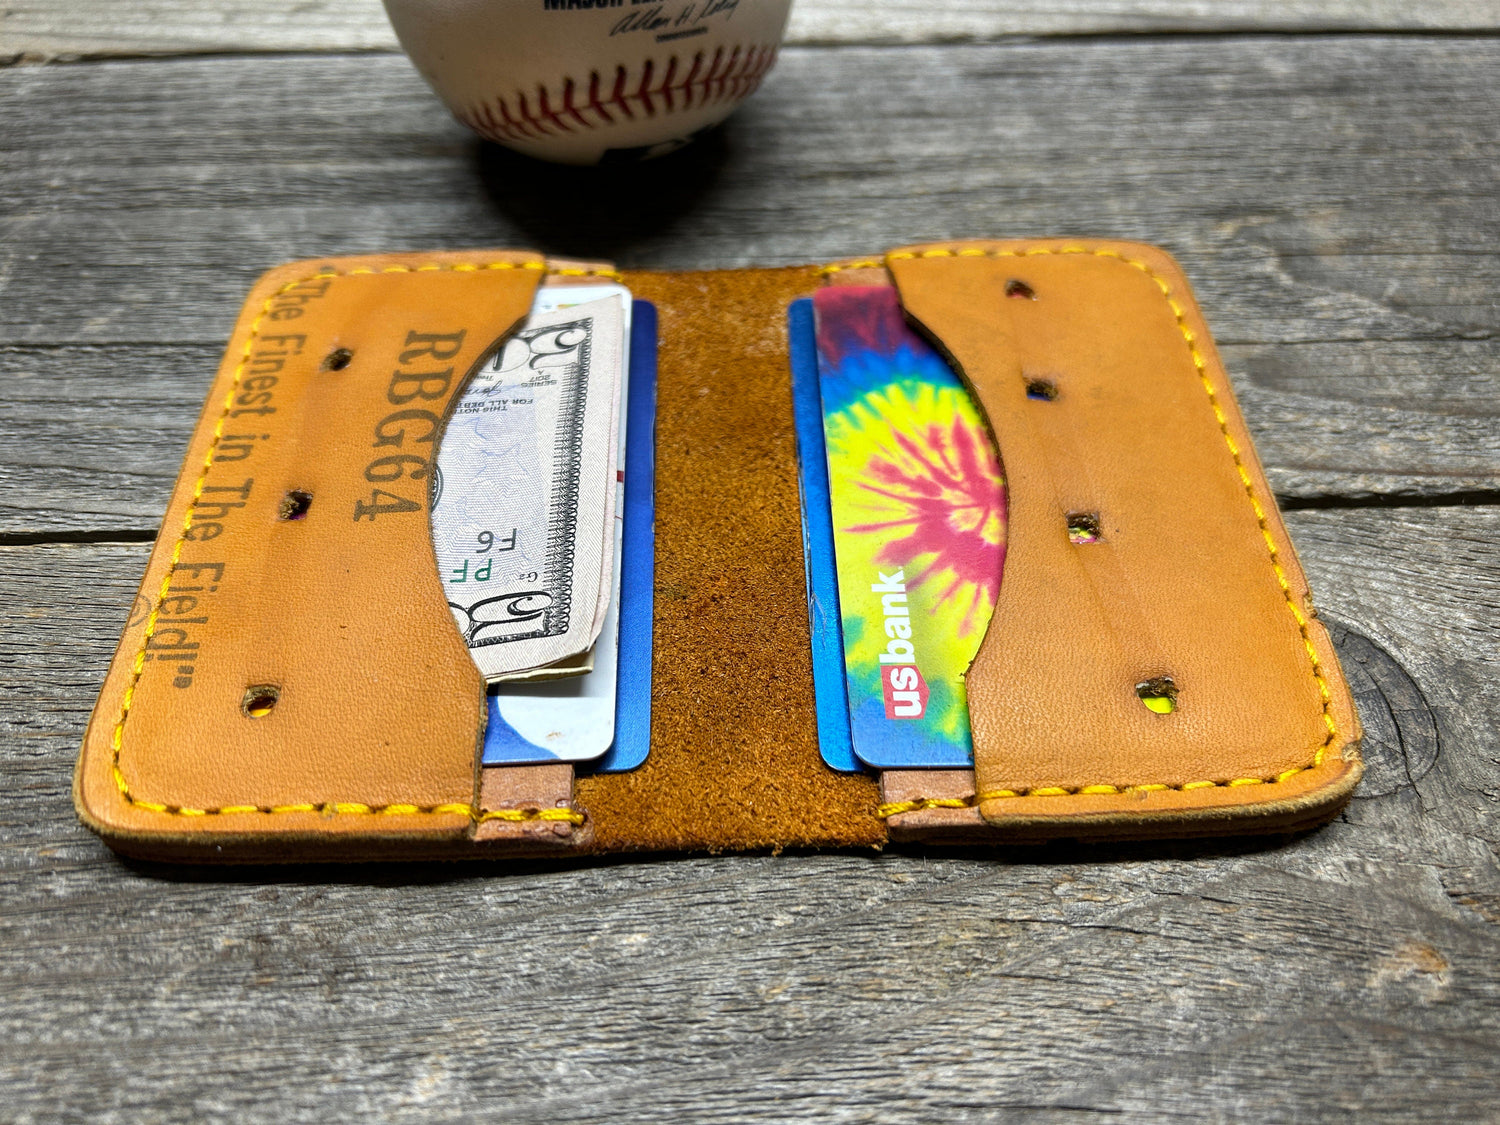 Vintage Rawlings Ryne Sandberg Baseball Glove Wallet!